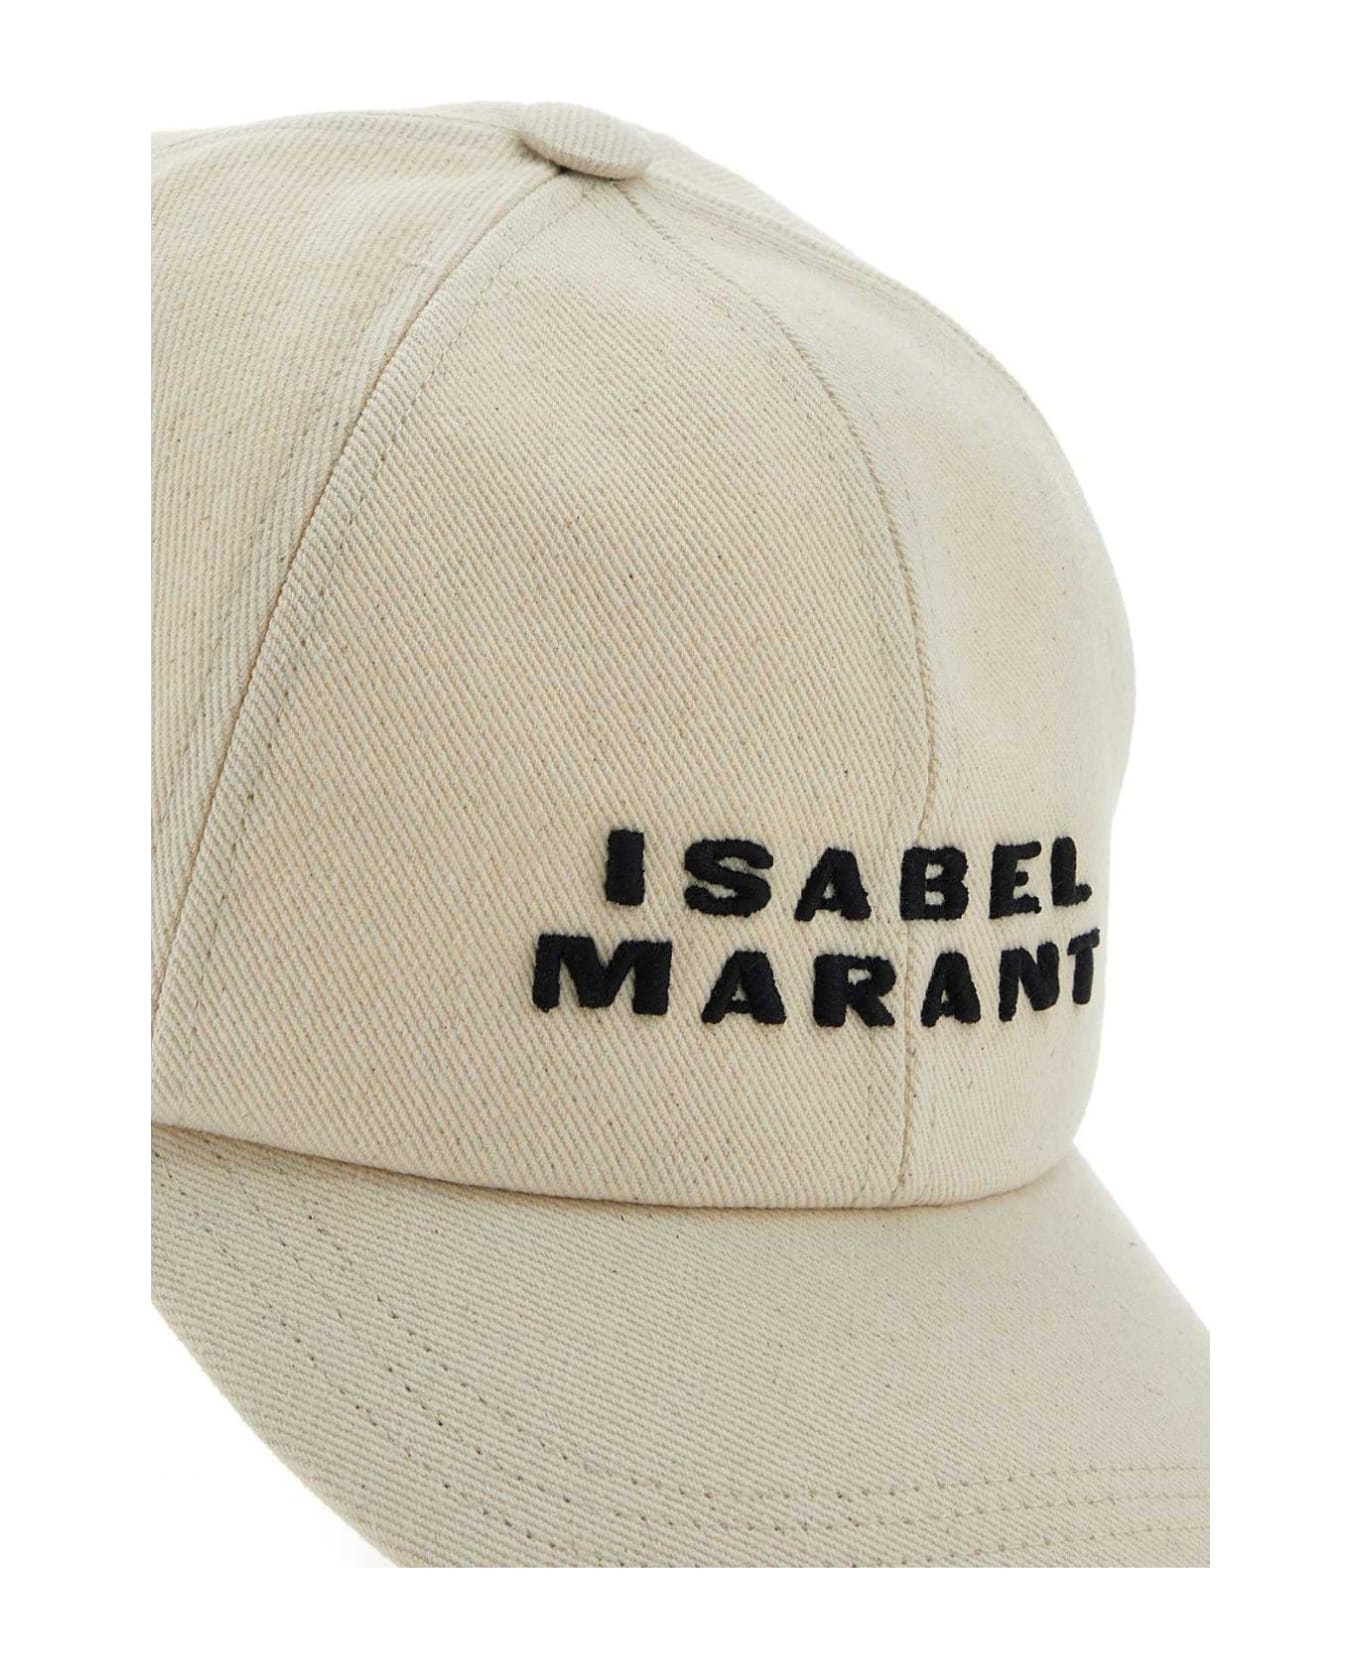 Isabel Marant Logo Embroidered Baseball Cap - Ecbk Ecru Black 帽子